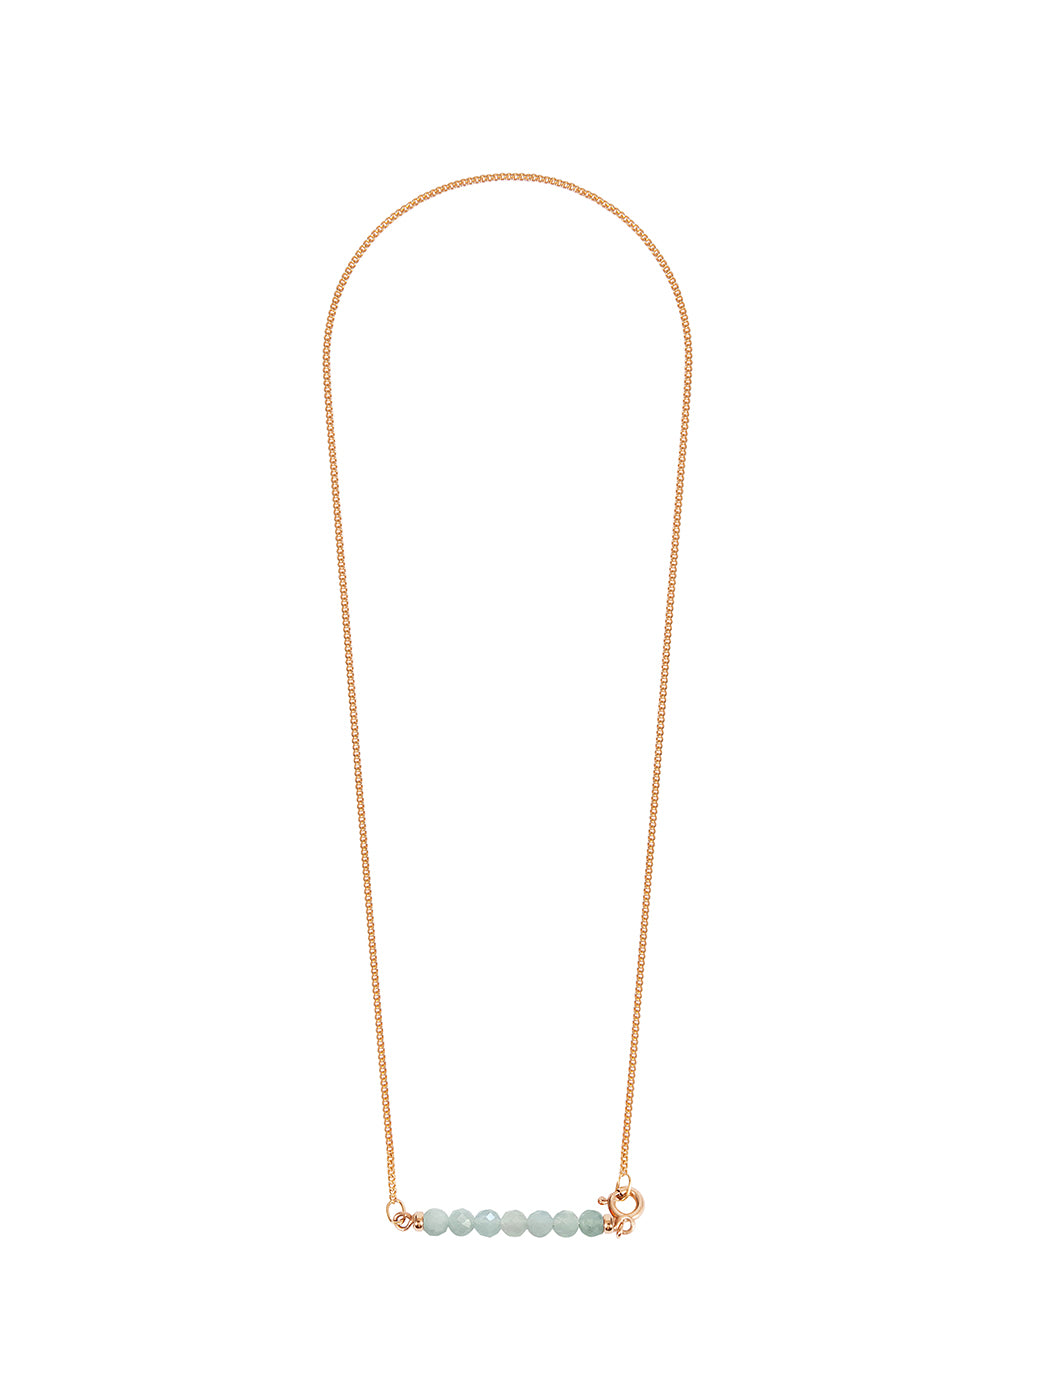 Fiorina Jewellery Gold Friendship Necklace Aquamarine